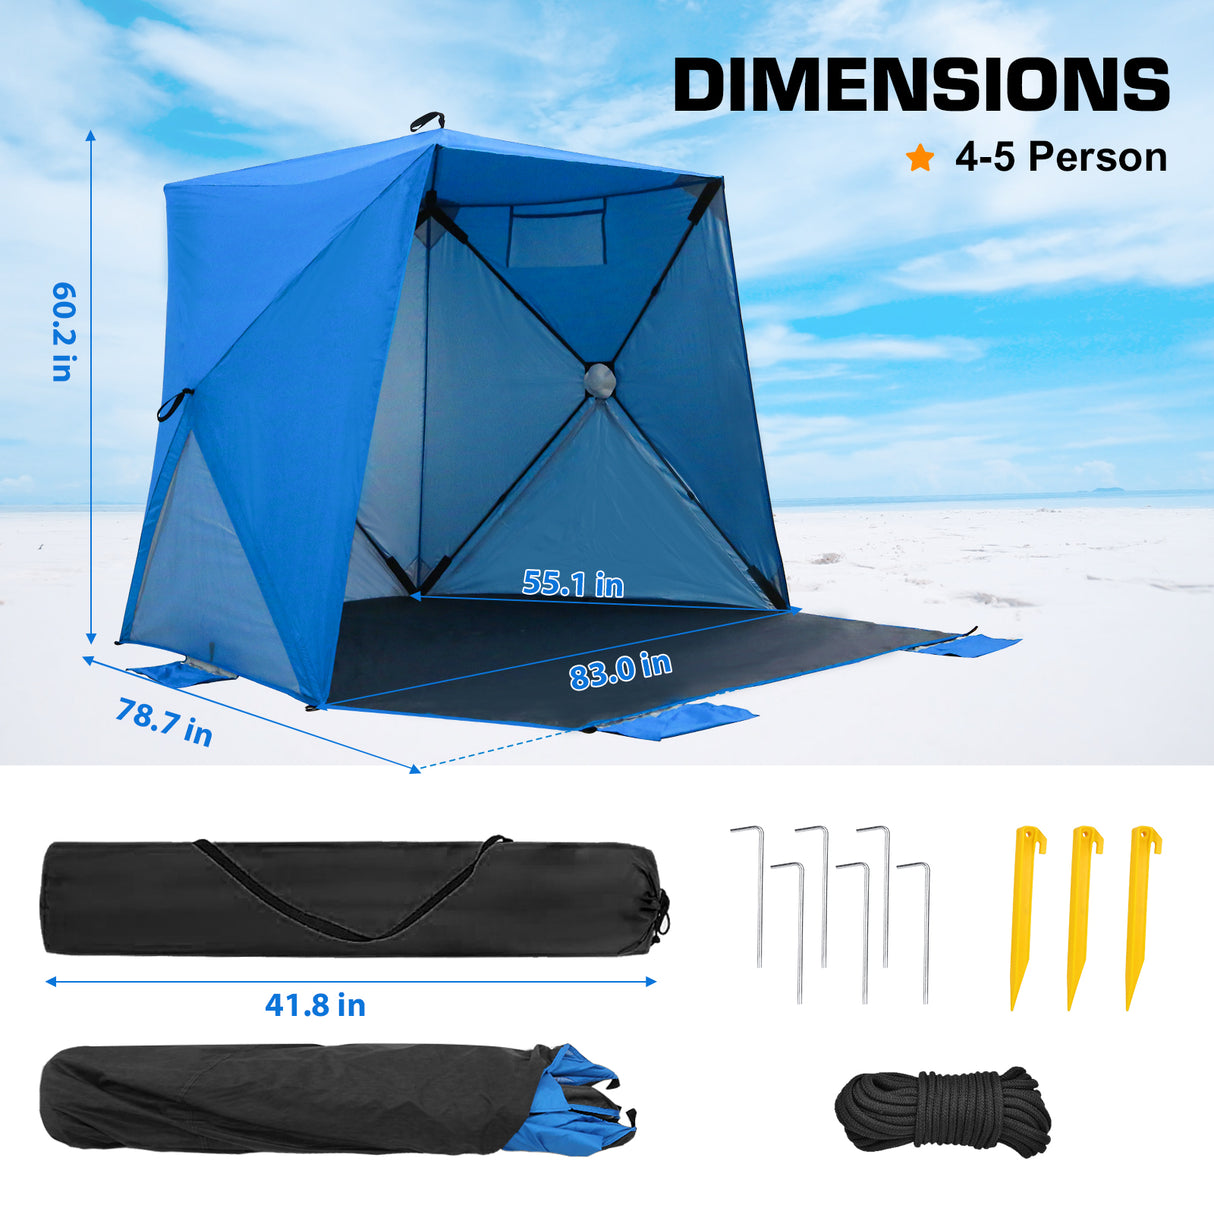 EAGLE PEAK Pop Up Beach Tent, Portable Sun Shelter